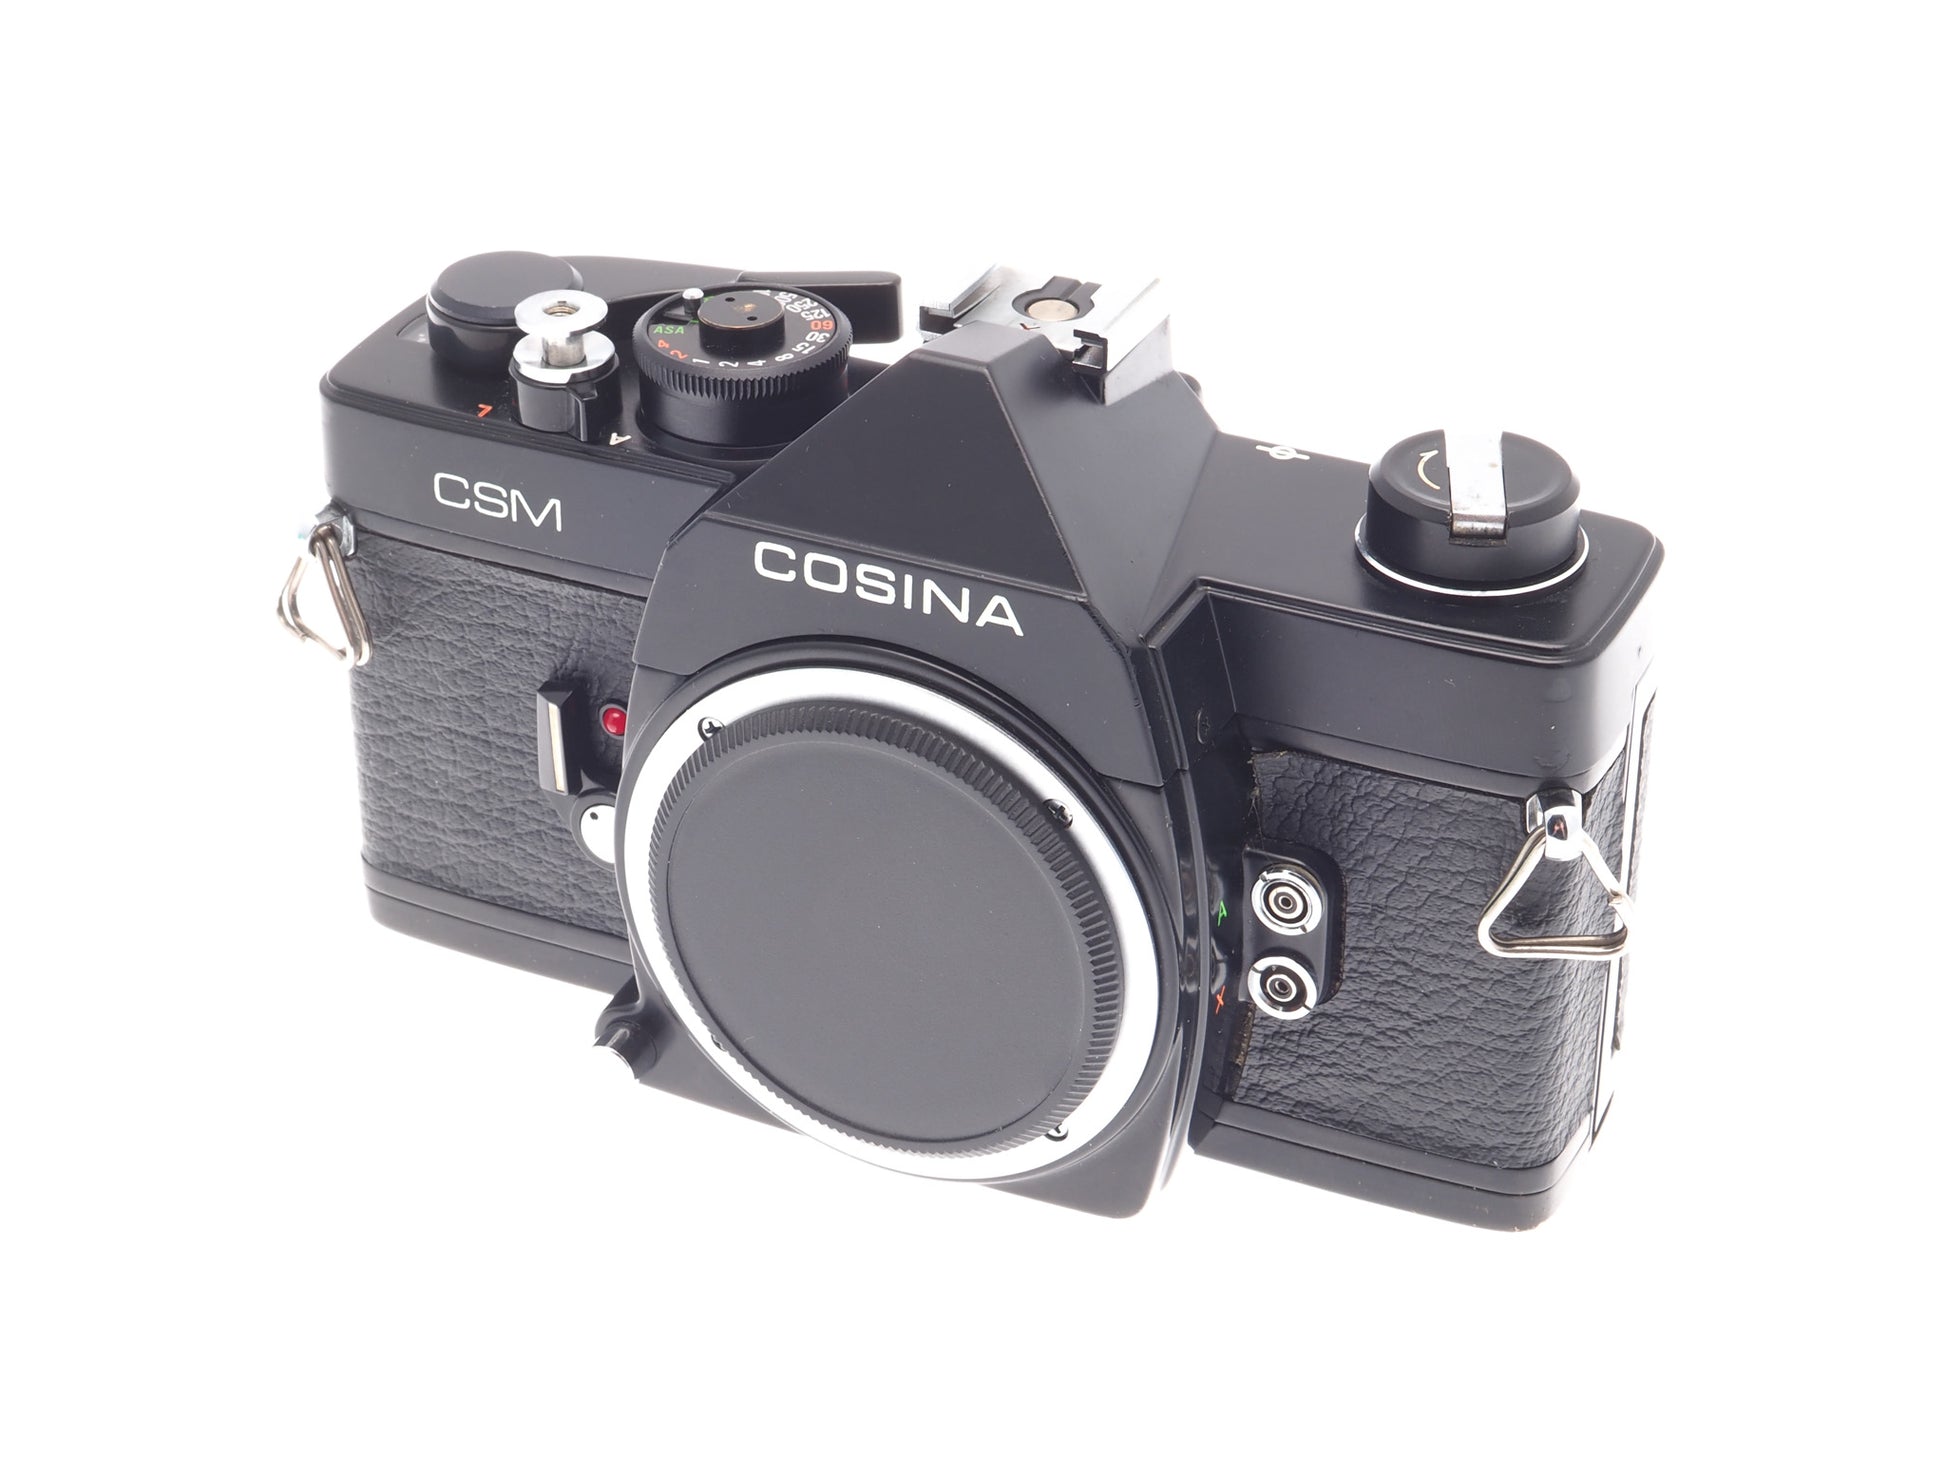 Cosina CSM - Camera